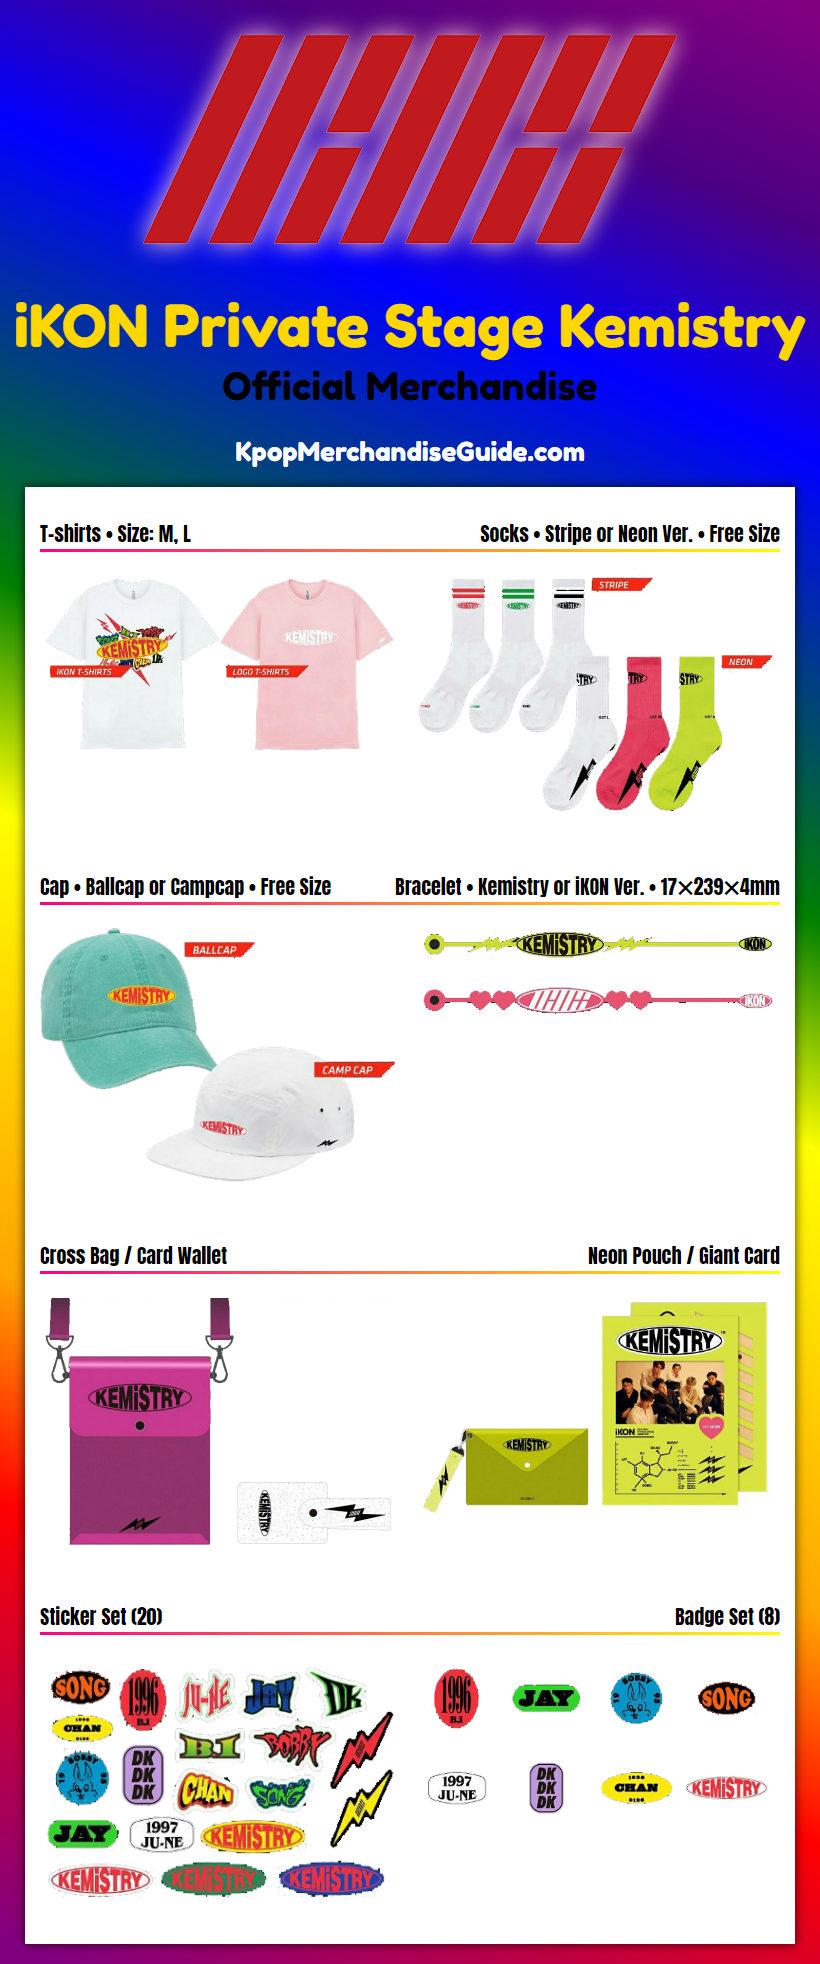 iKON Private Stage Kemistry Merchandise